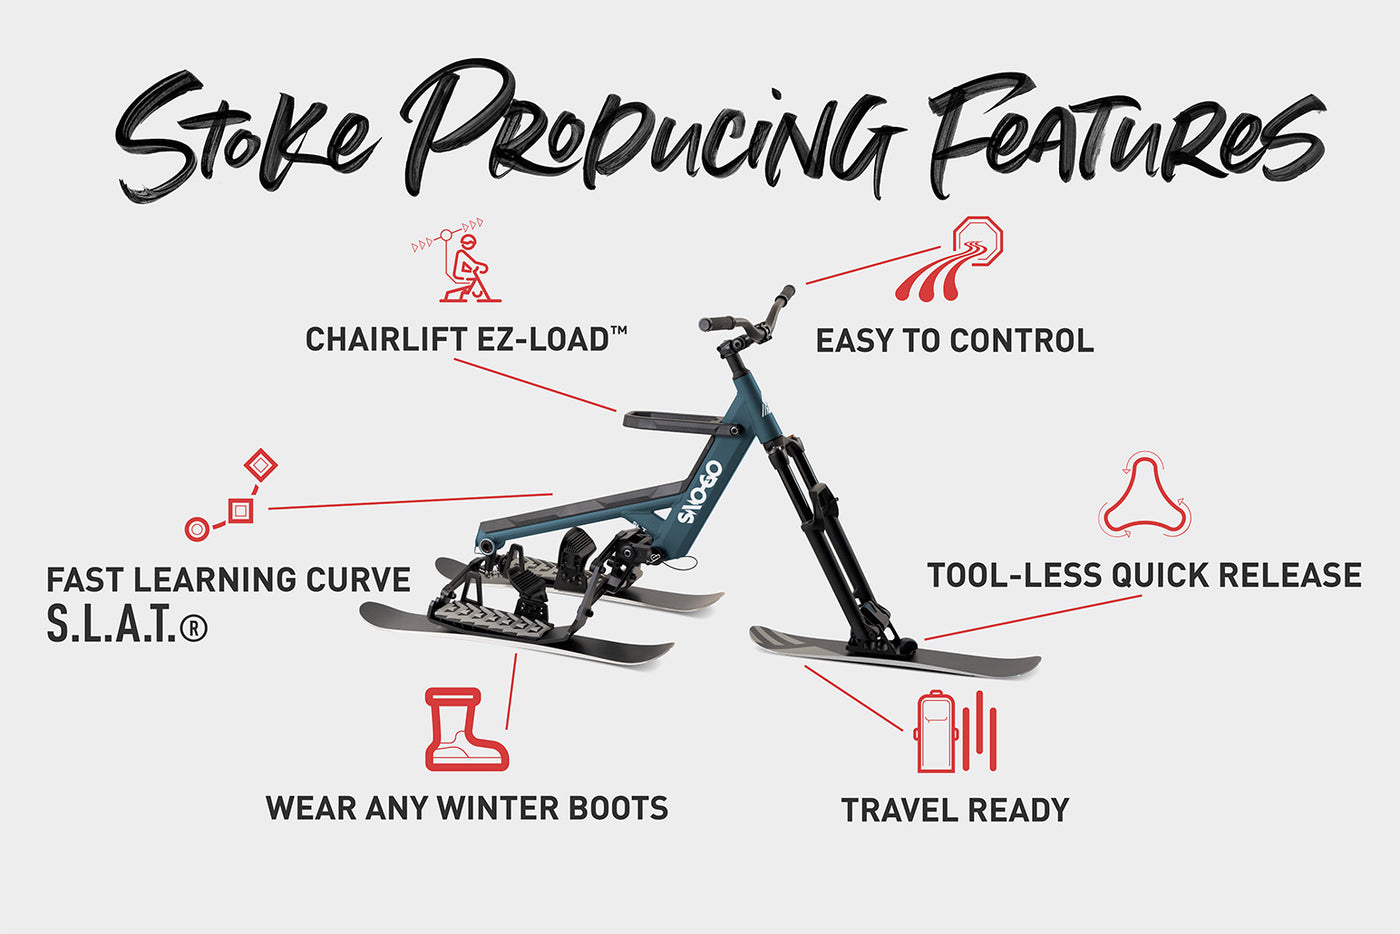 Buyer's Guide – SNO-GO Ski Bikes